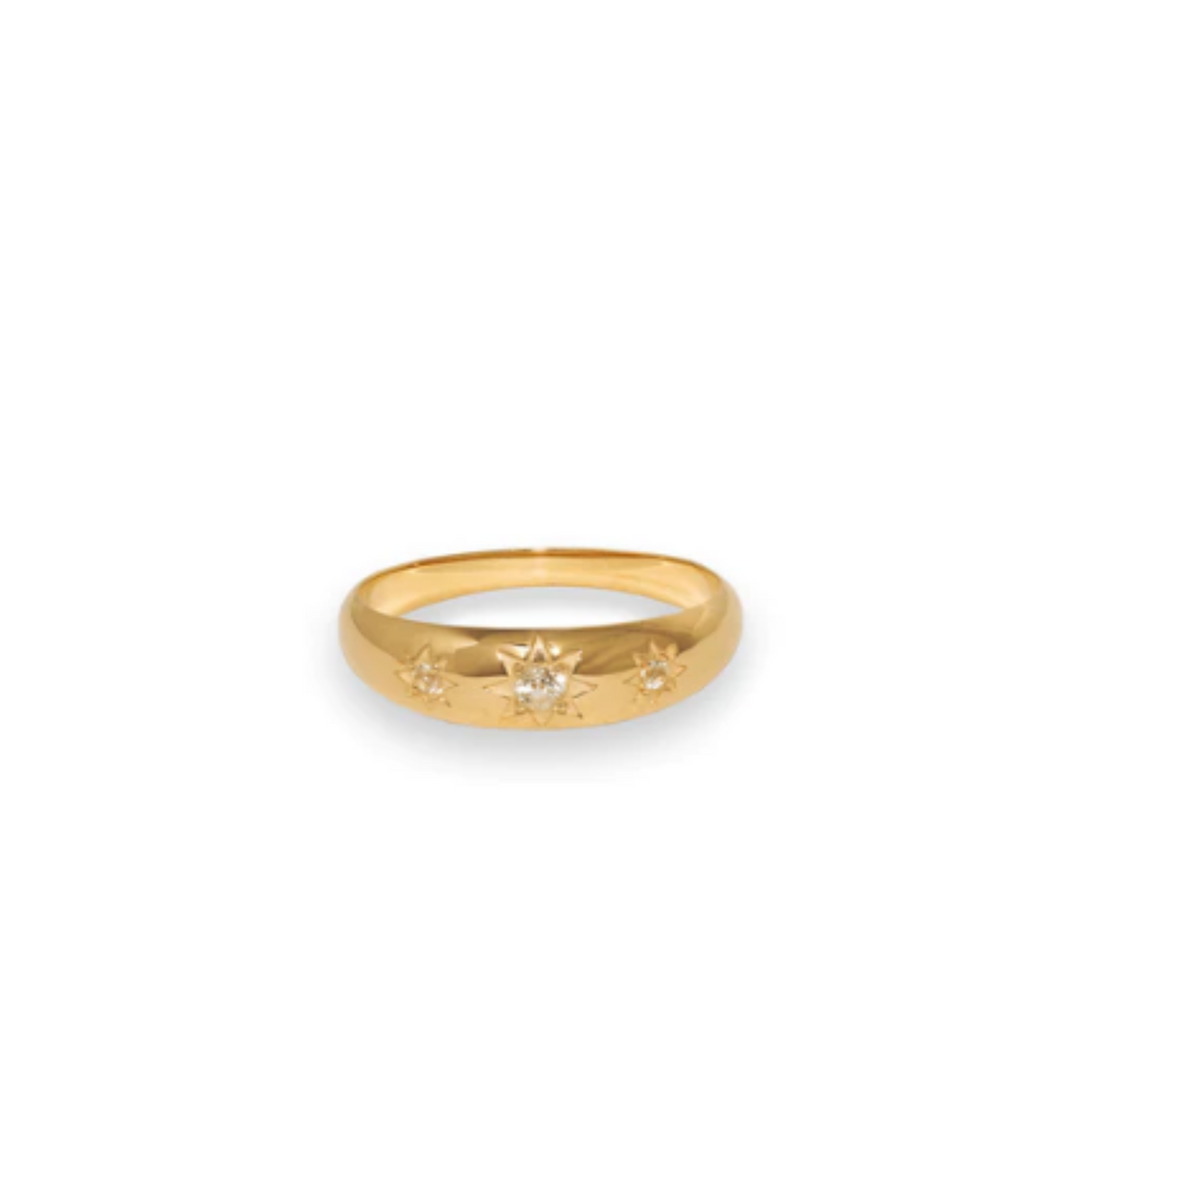 Etoile Ring, 10K Gold And White Topaz